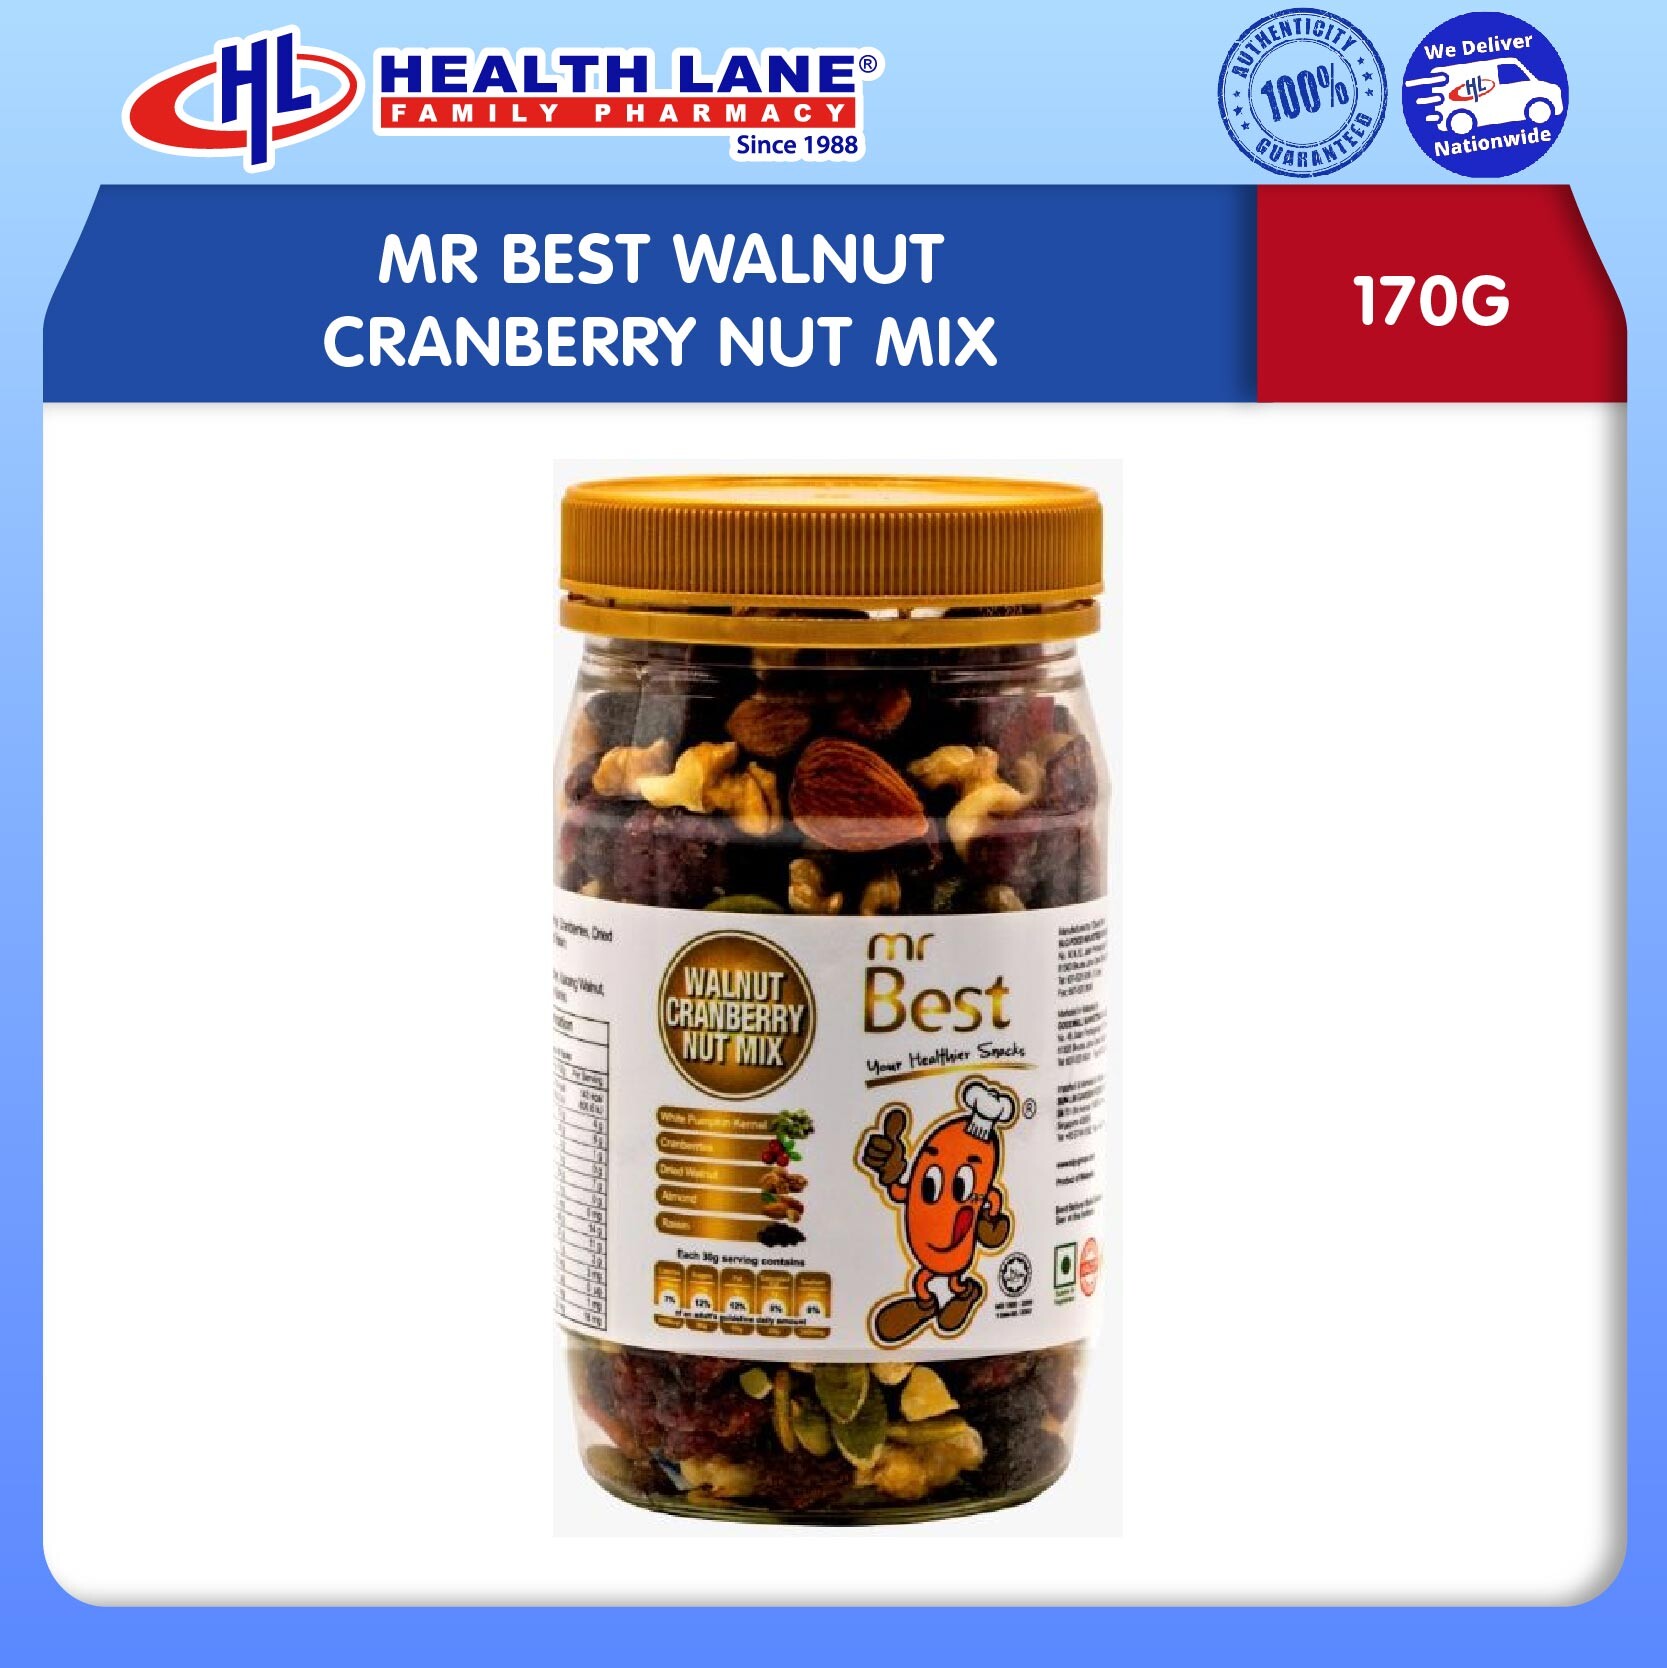 MR BEST WALNUT CRANBERRY NUT MIX (170G)